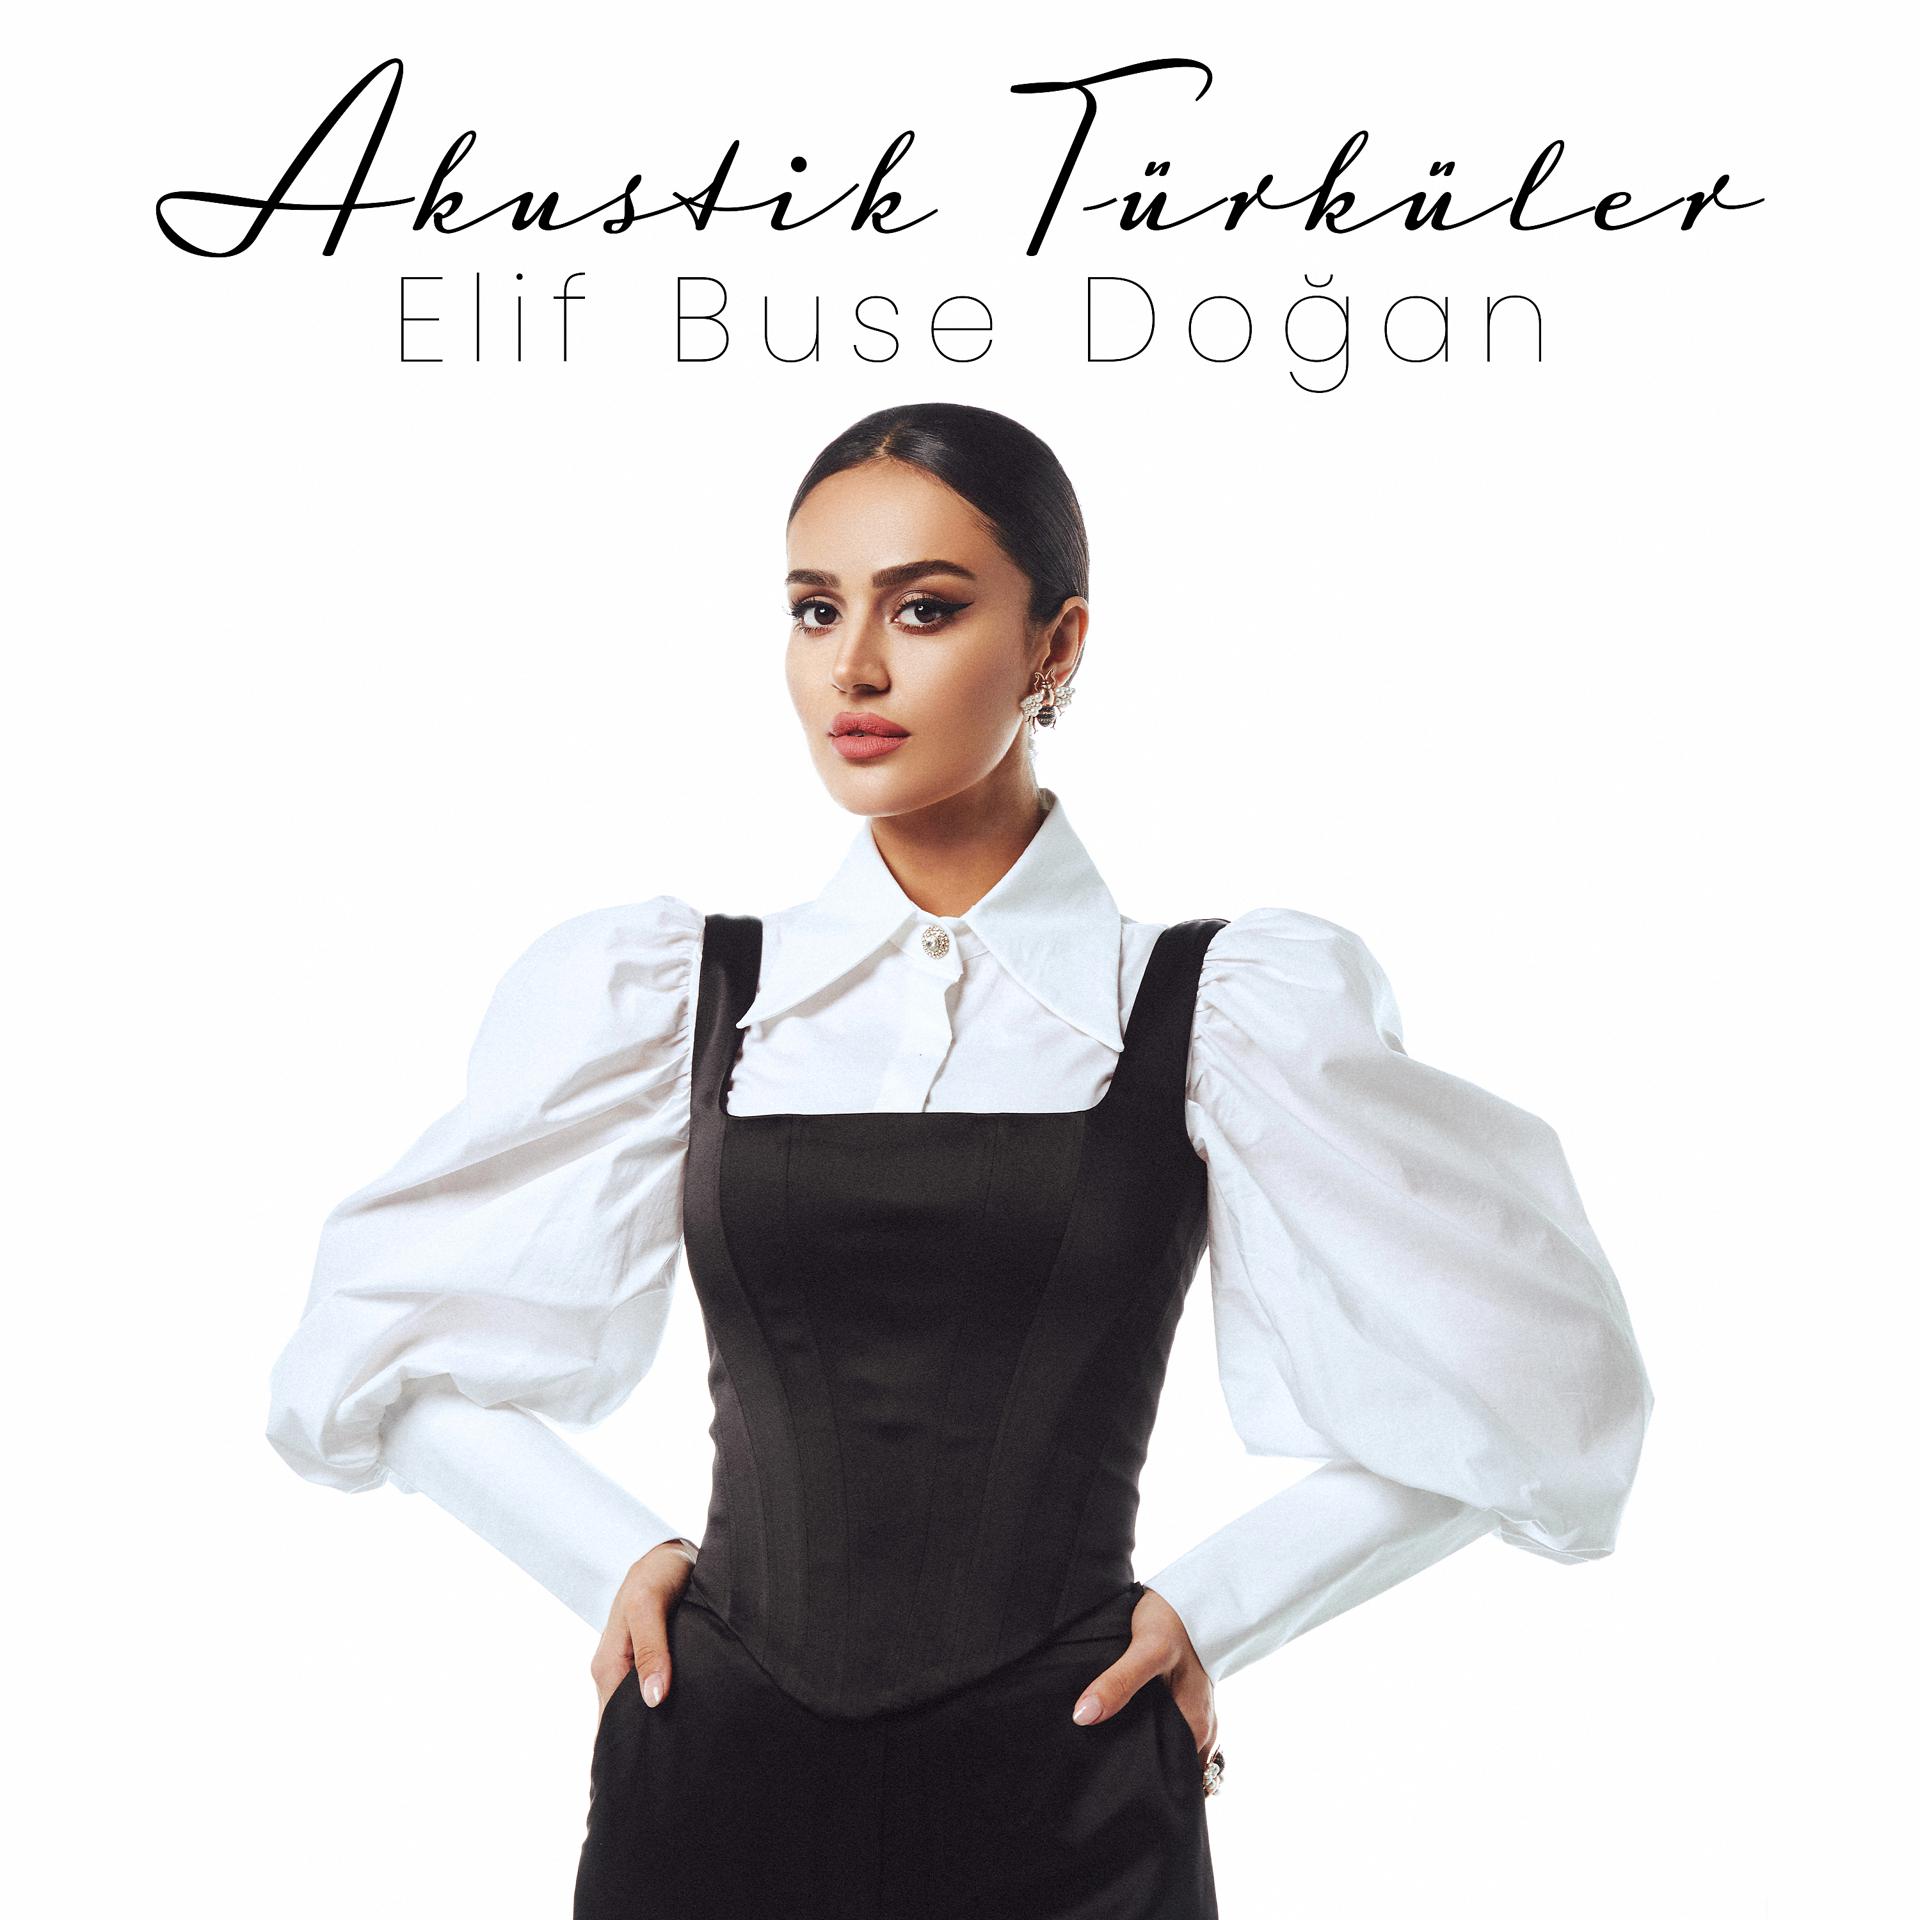 Постер альбома Akustik Türküler